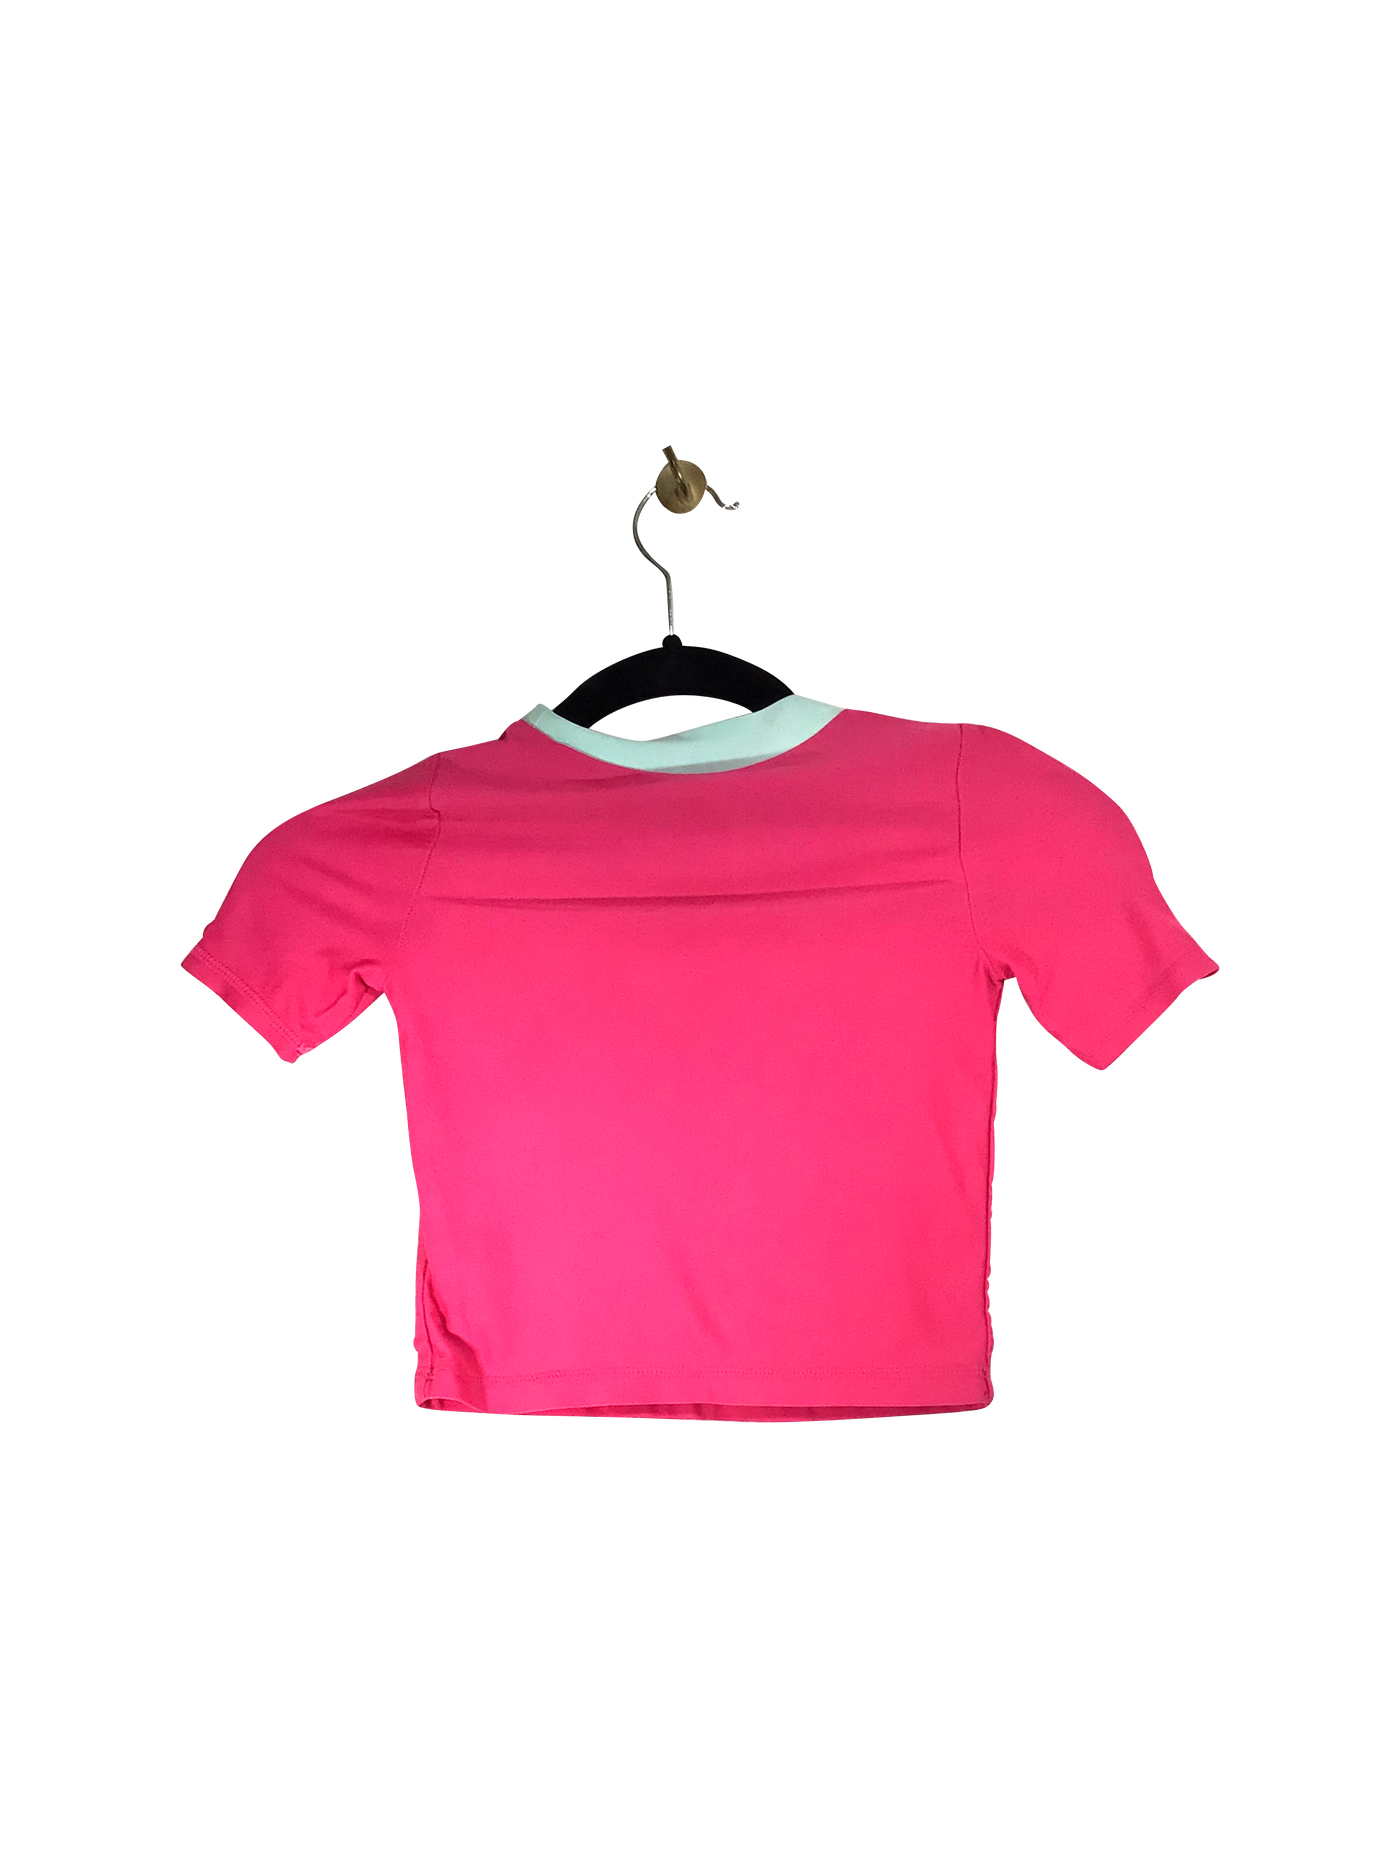 CARTER'S Women T-Shirts Regular fit in Pink - Size 4T | 5.99 $ KOOP